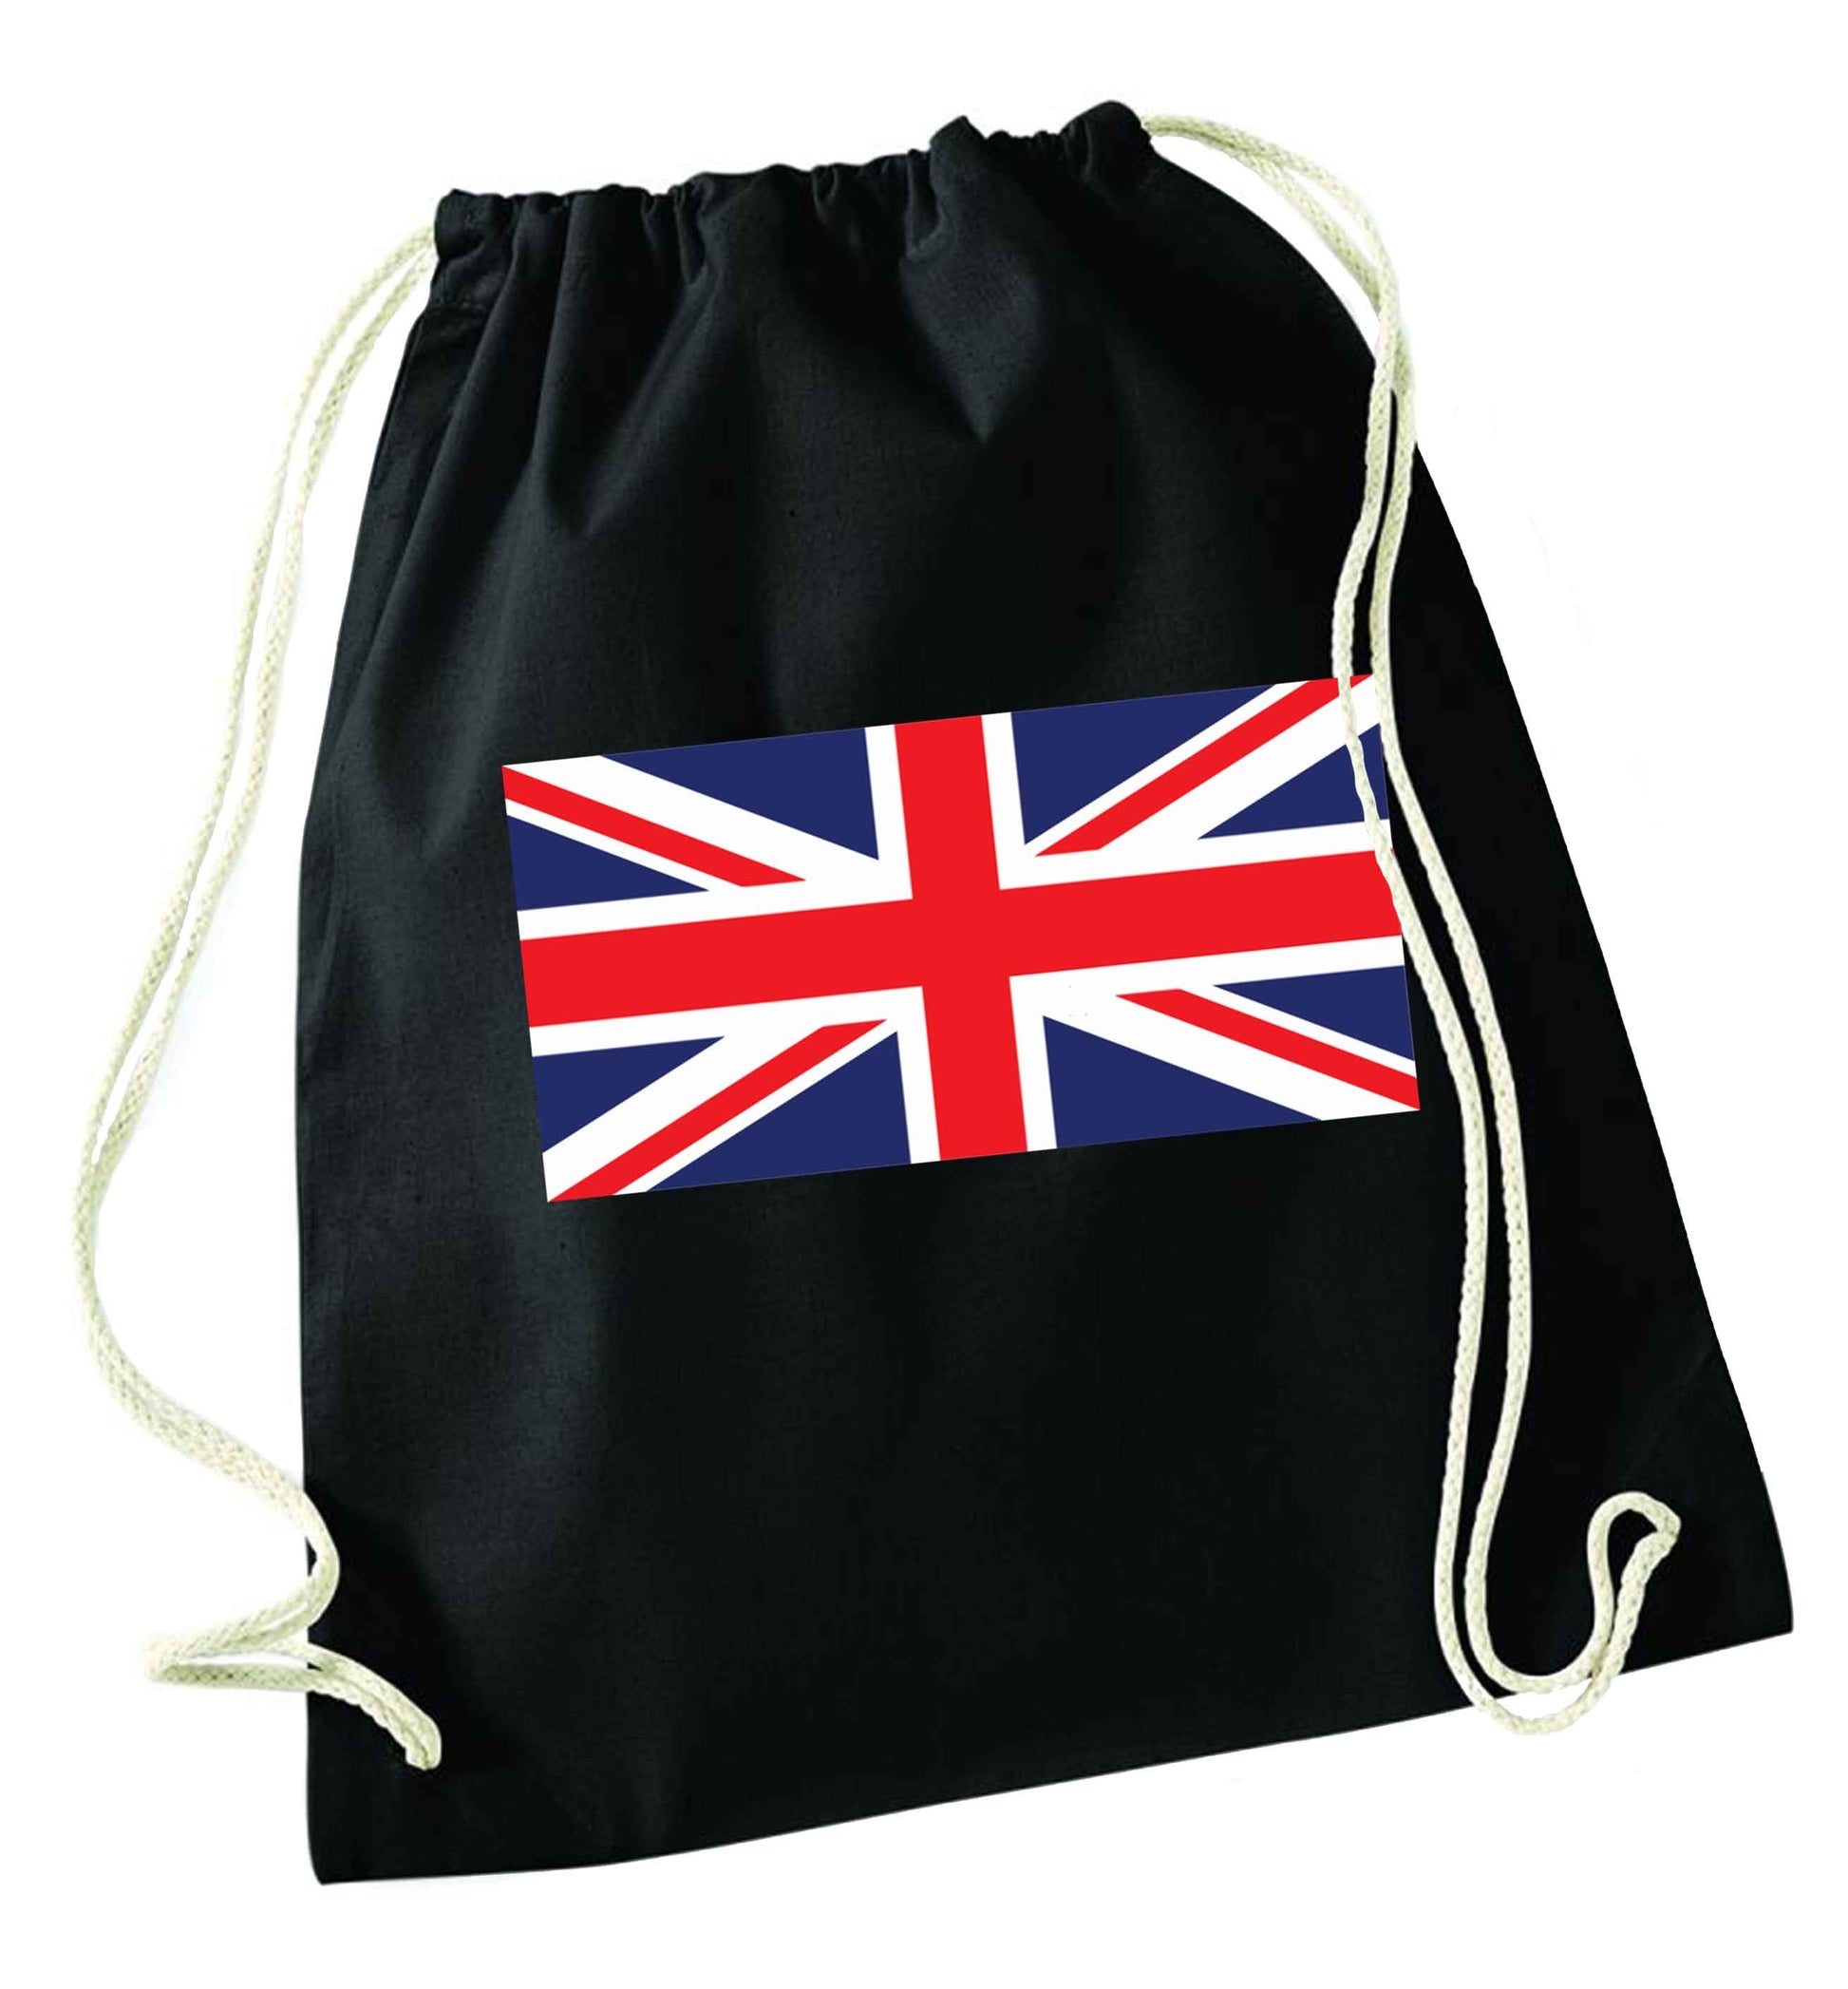 Union Jack black drawstring bag